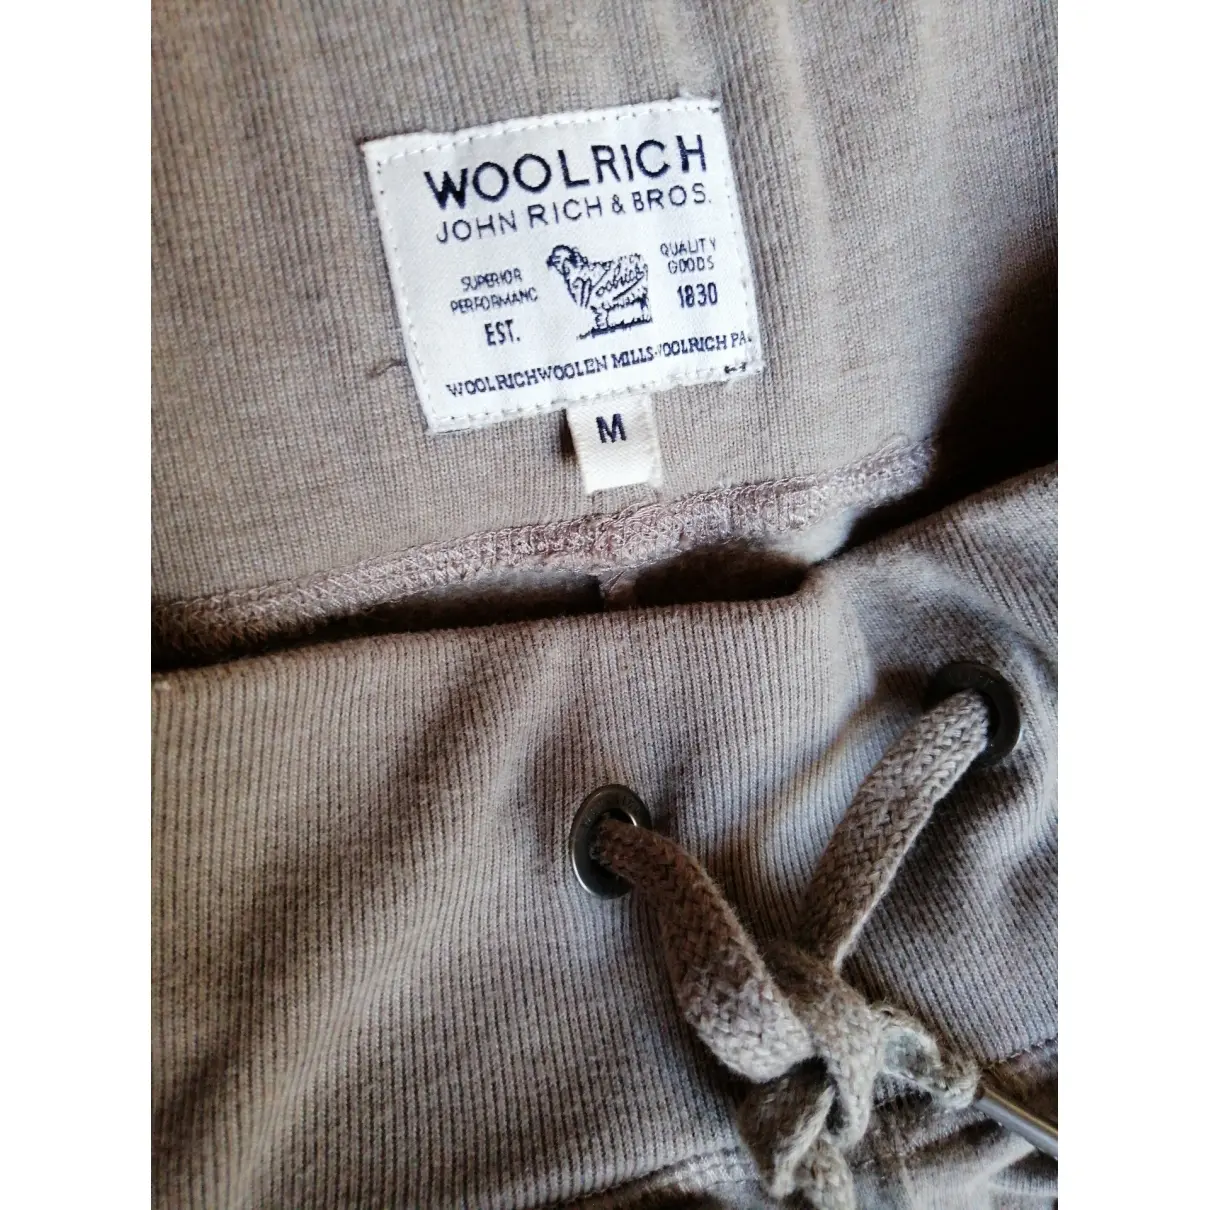 Buy Woolrich Carot pants online